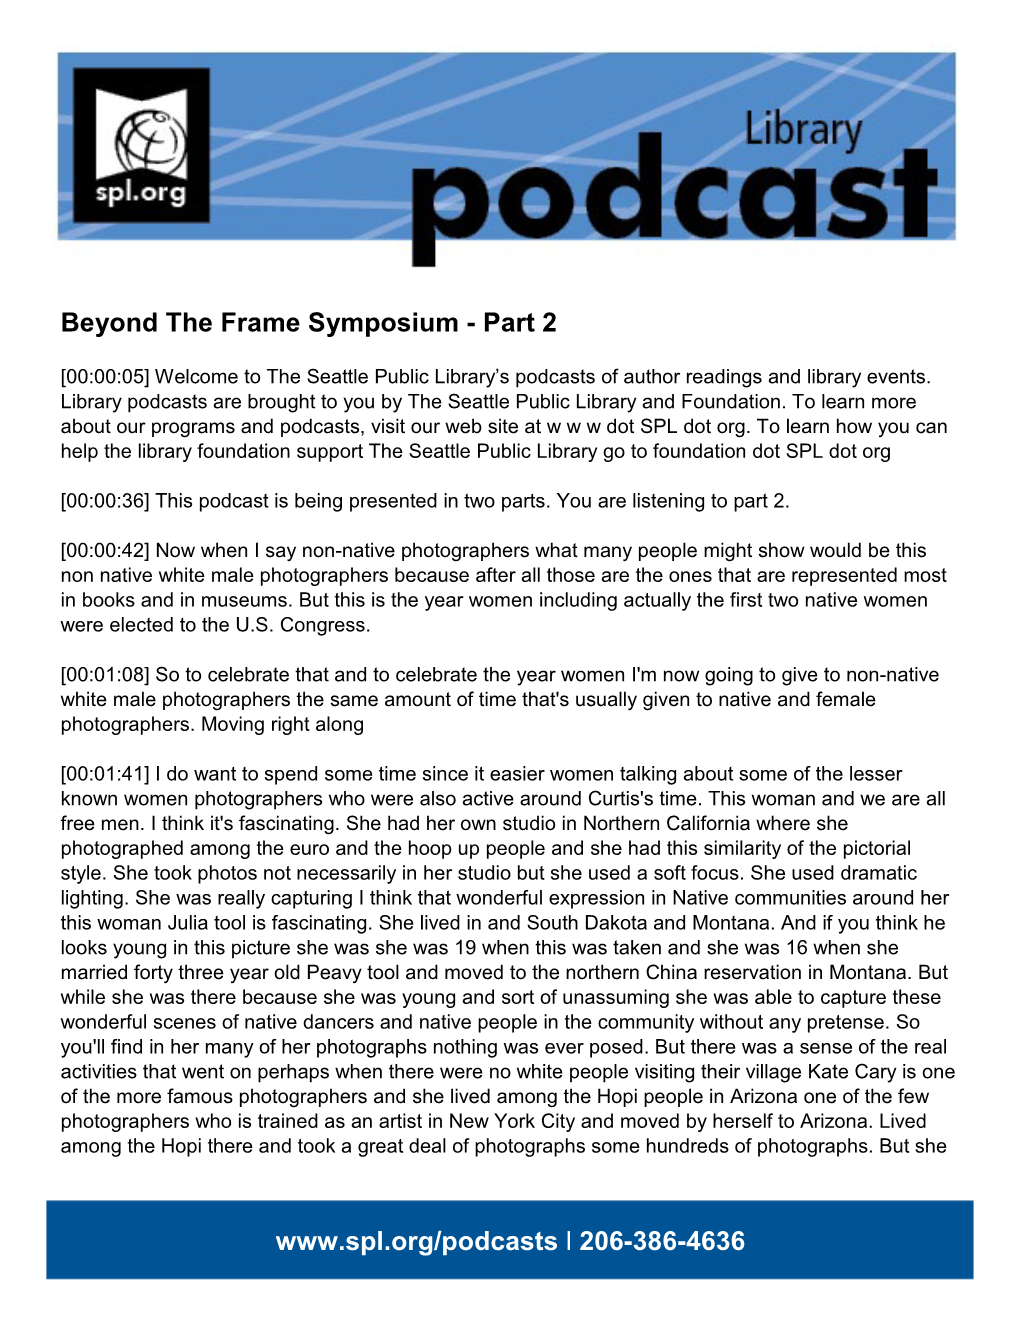 Beyond the Frame Symposium - Part 2